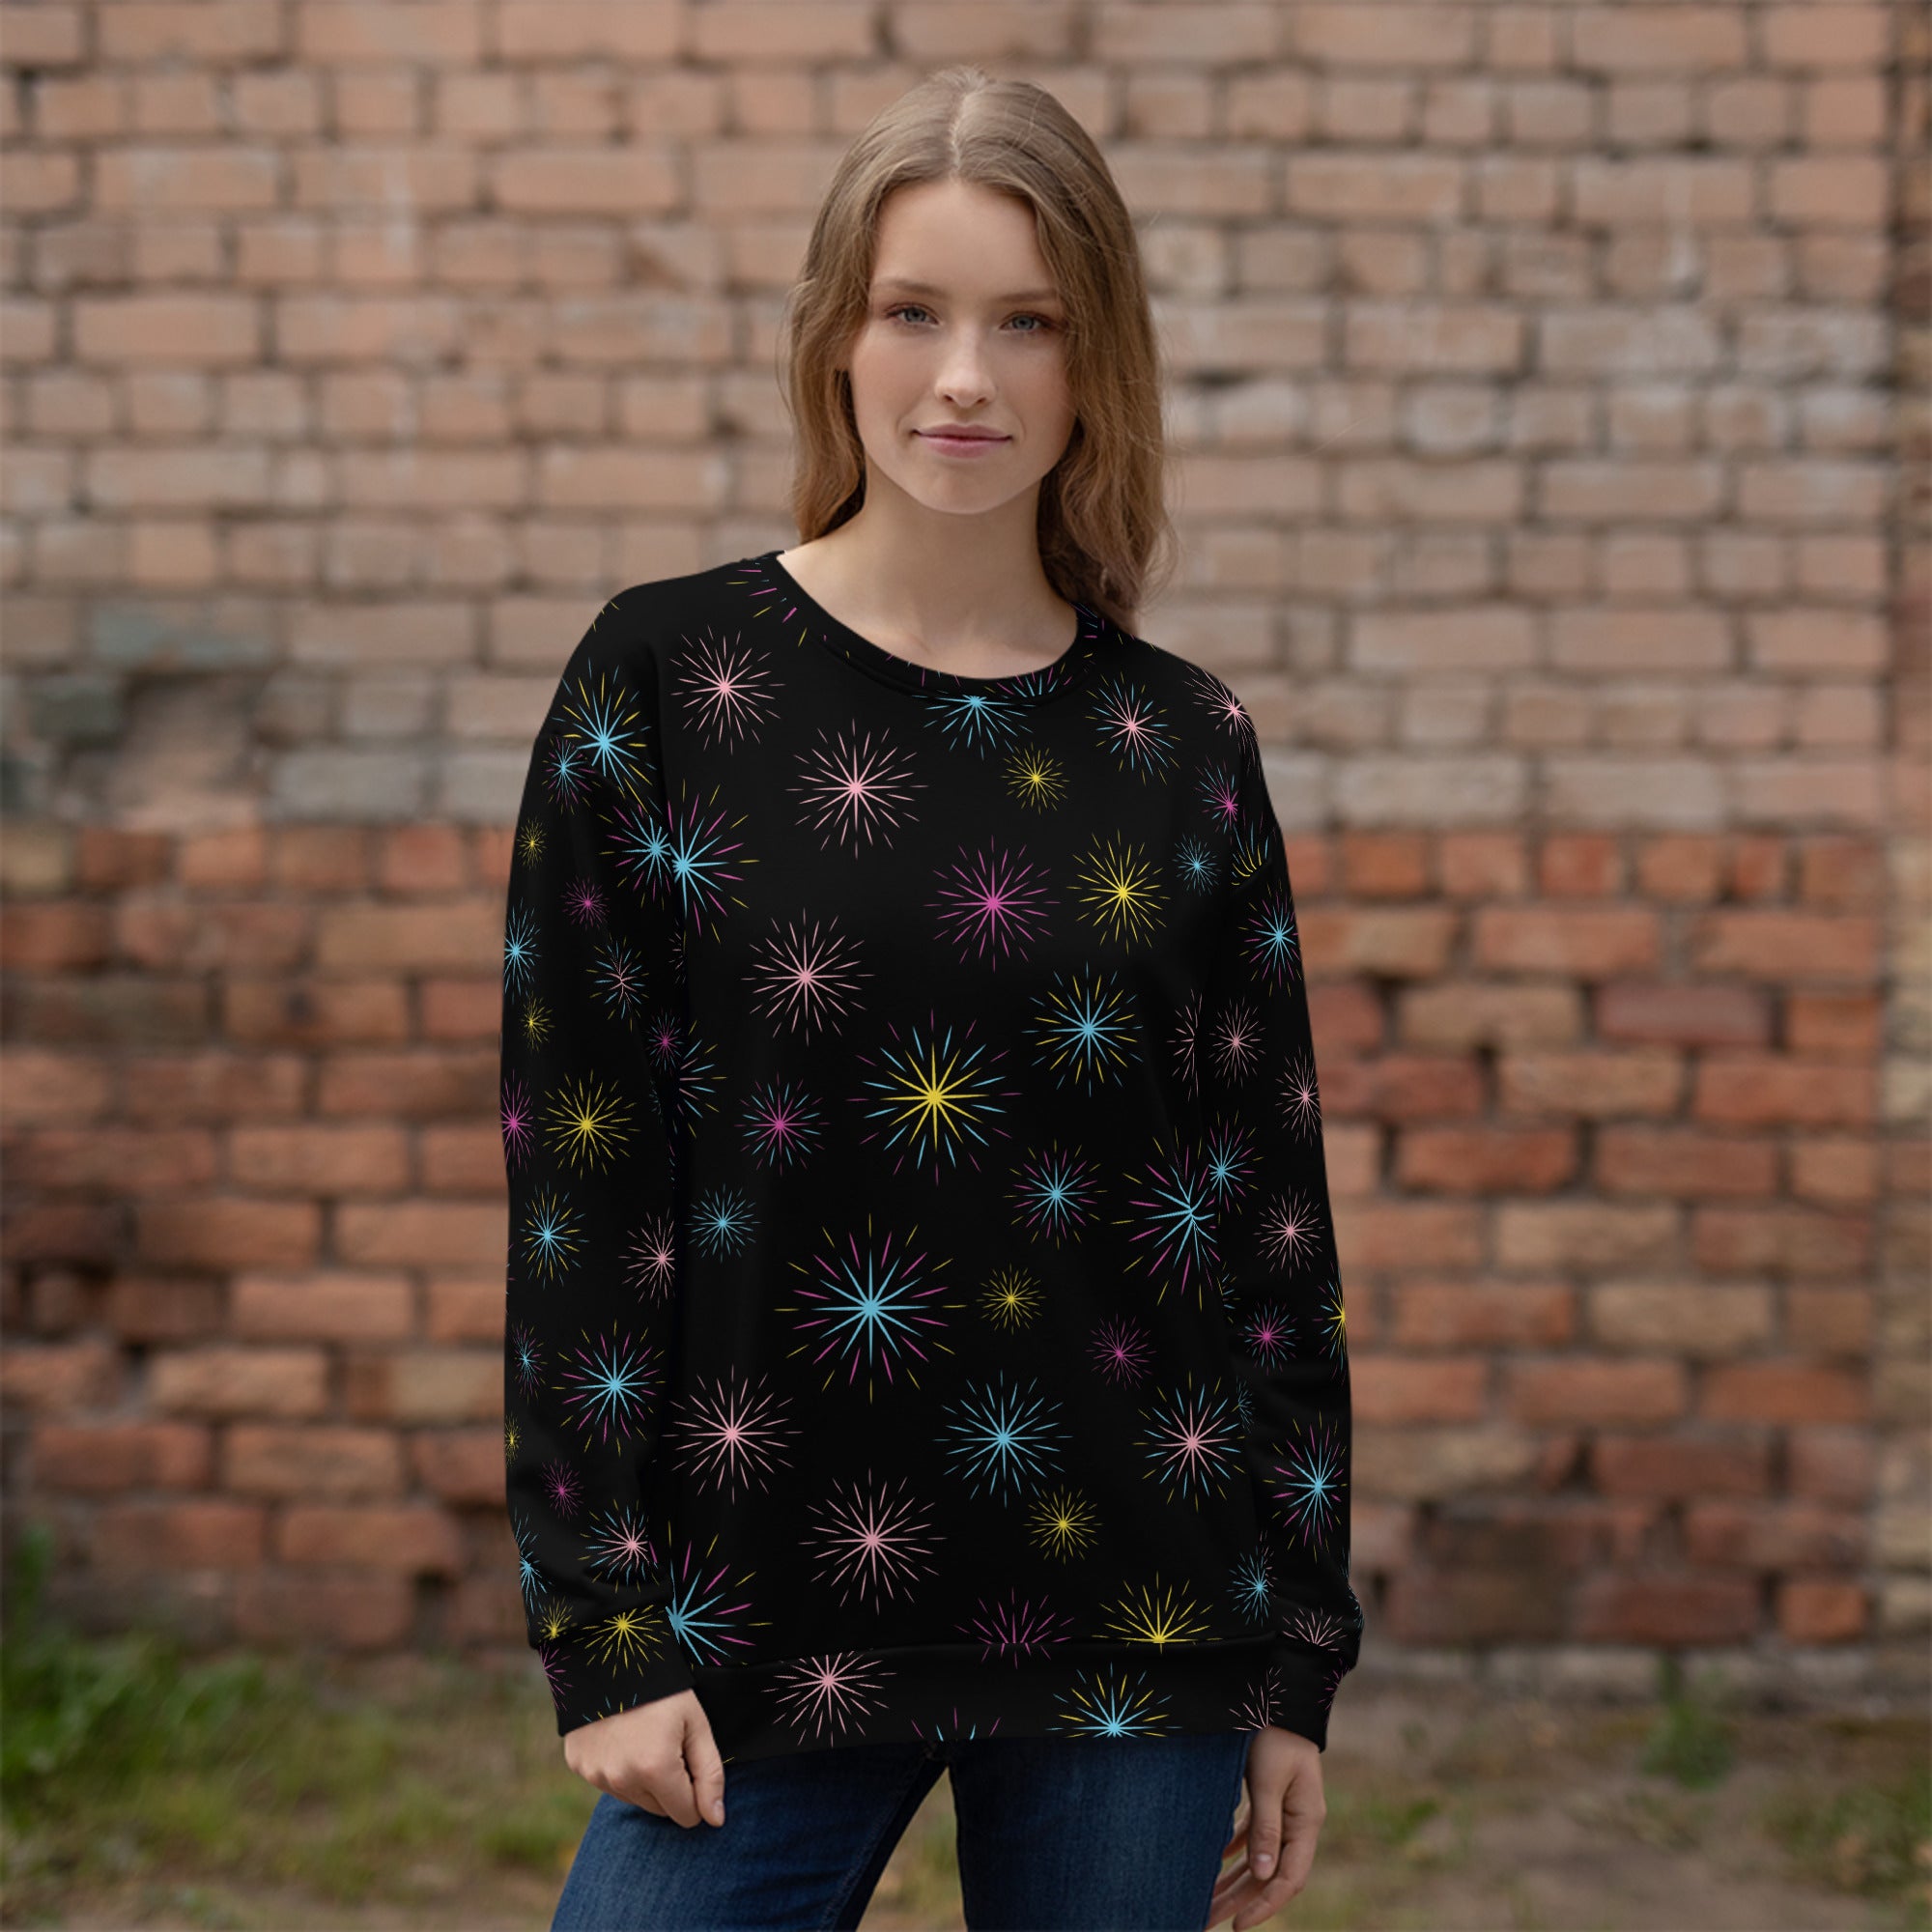 Stardust Shakti Sweatshirt: Stylish & Warm